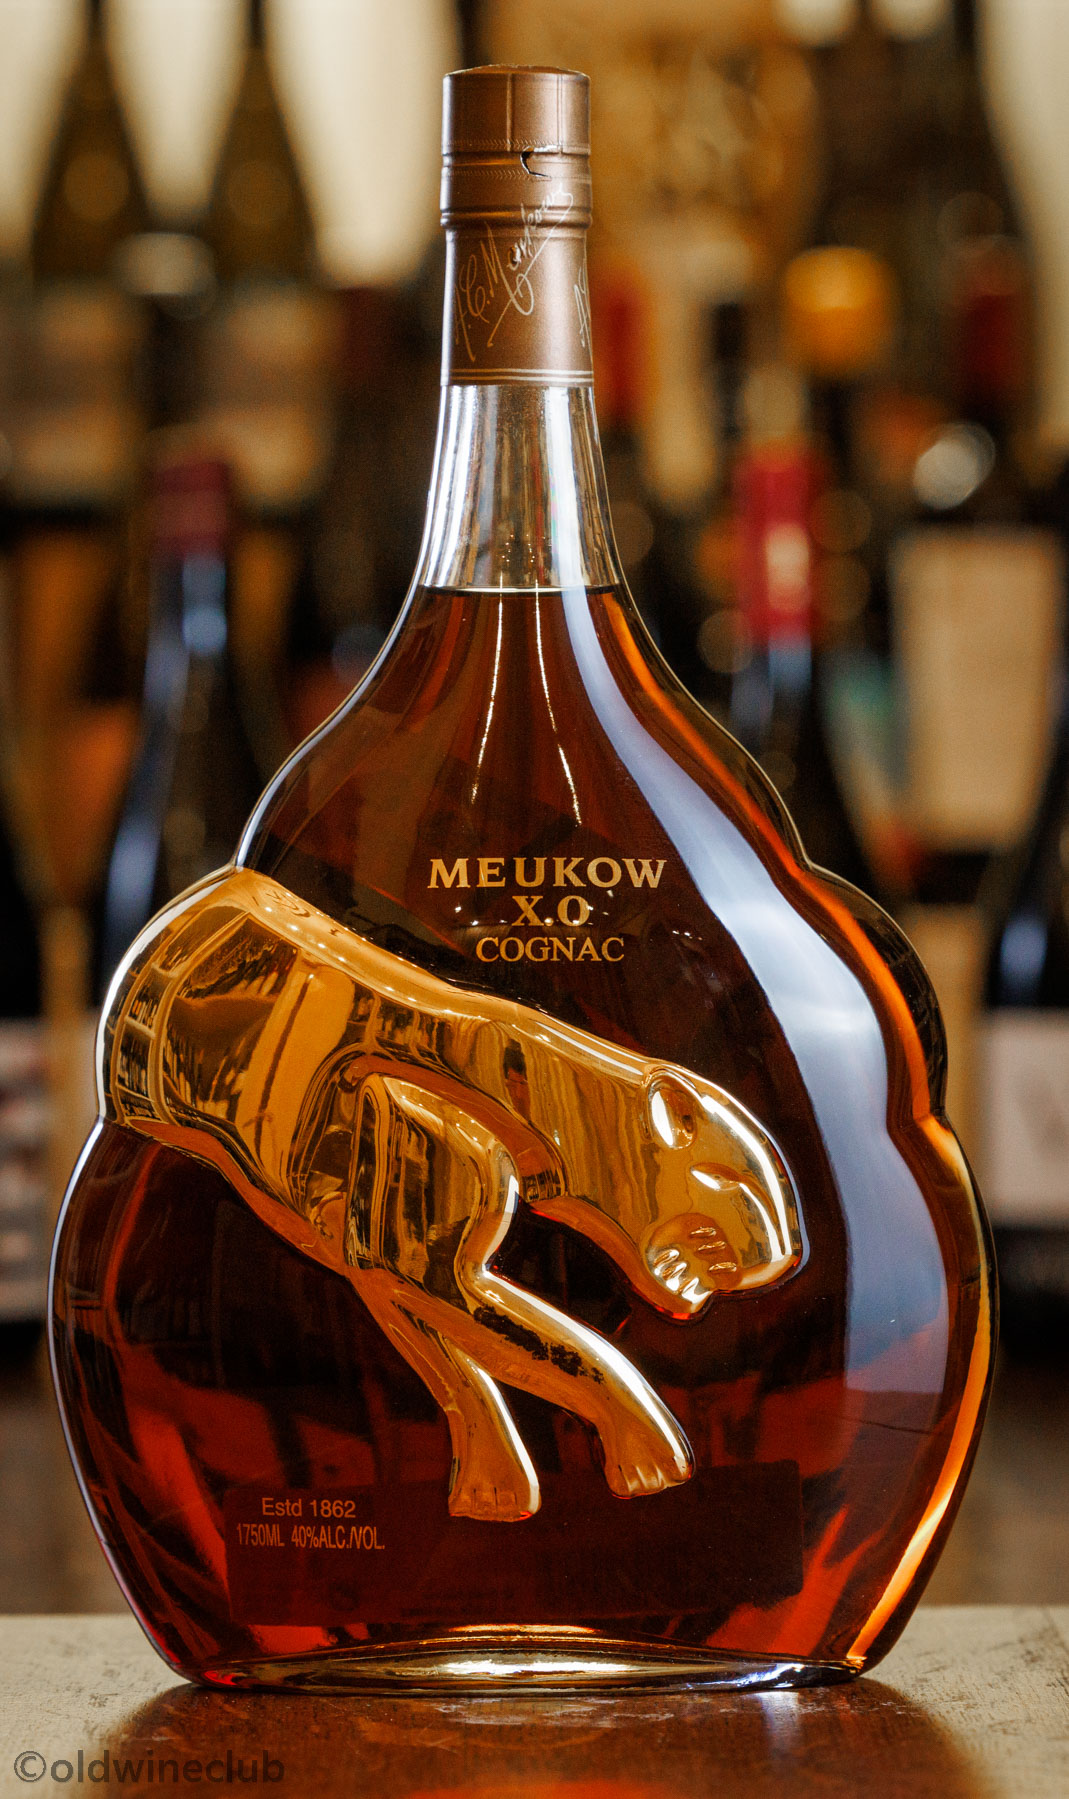 Meukow cognac. Meukow XO Cognac. Французский коньяк Meukow. Meukow VSOP.